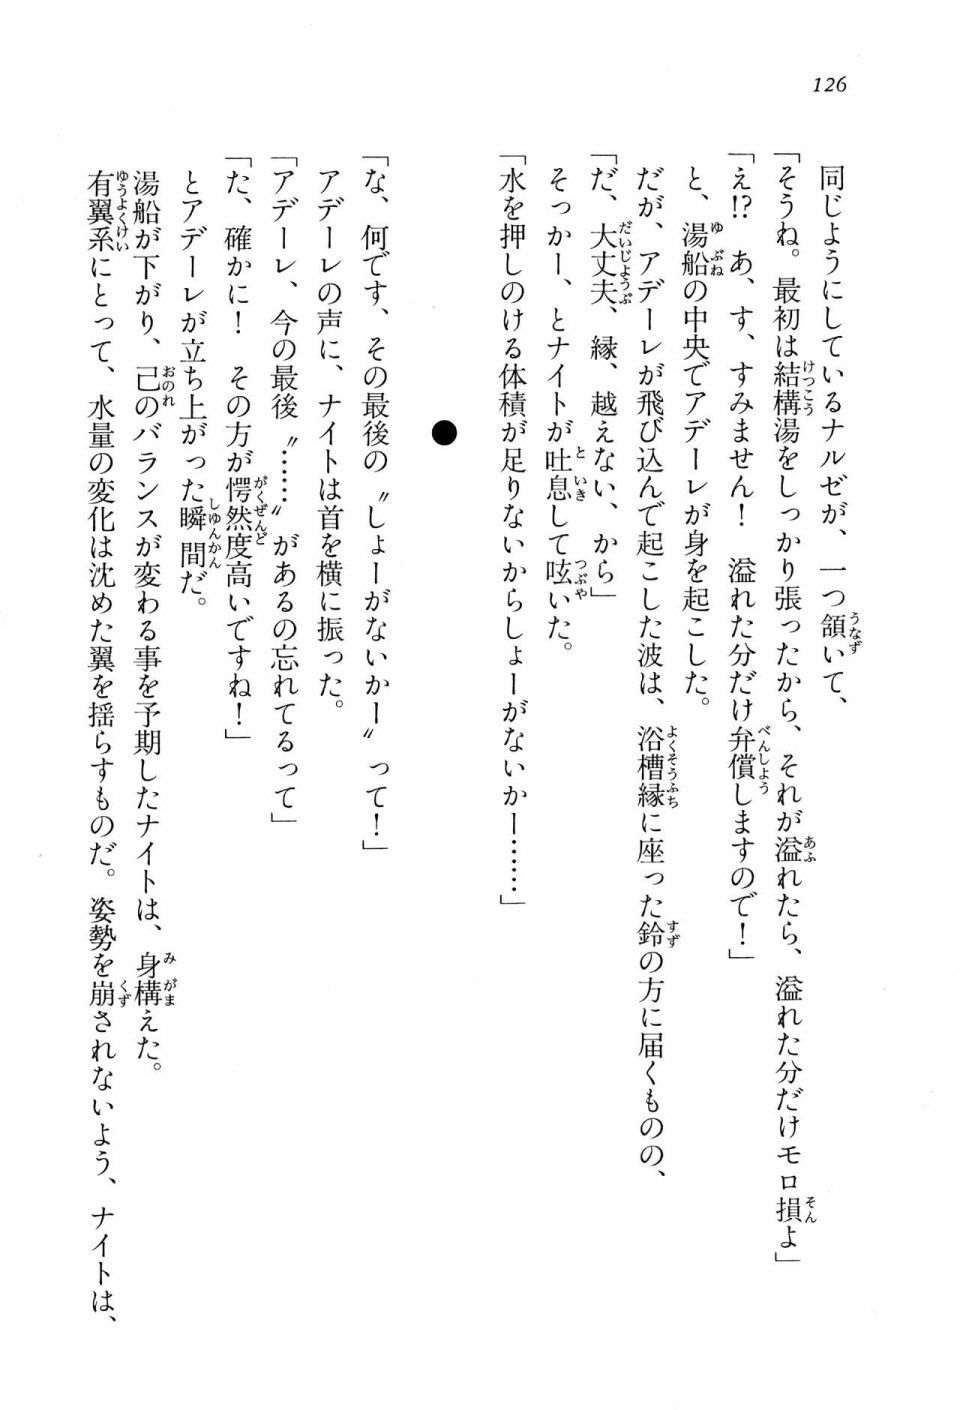 Kyoukai Senjou no Horizon BD Special Mininovel Vol 8(4B) - Photo #130